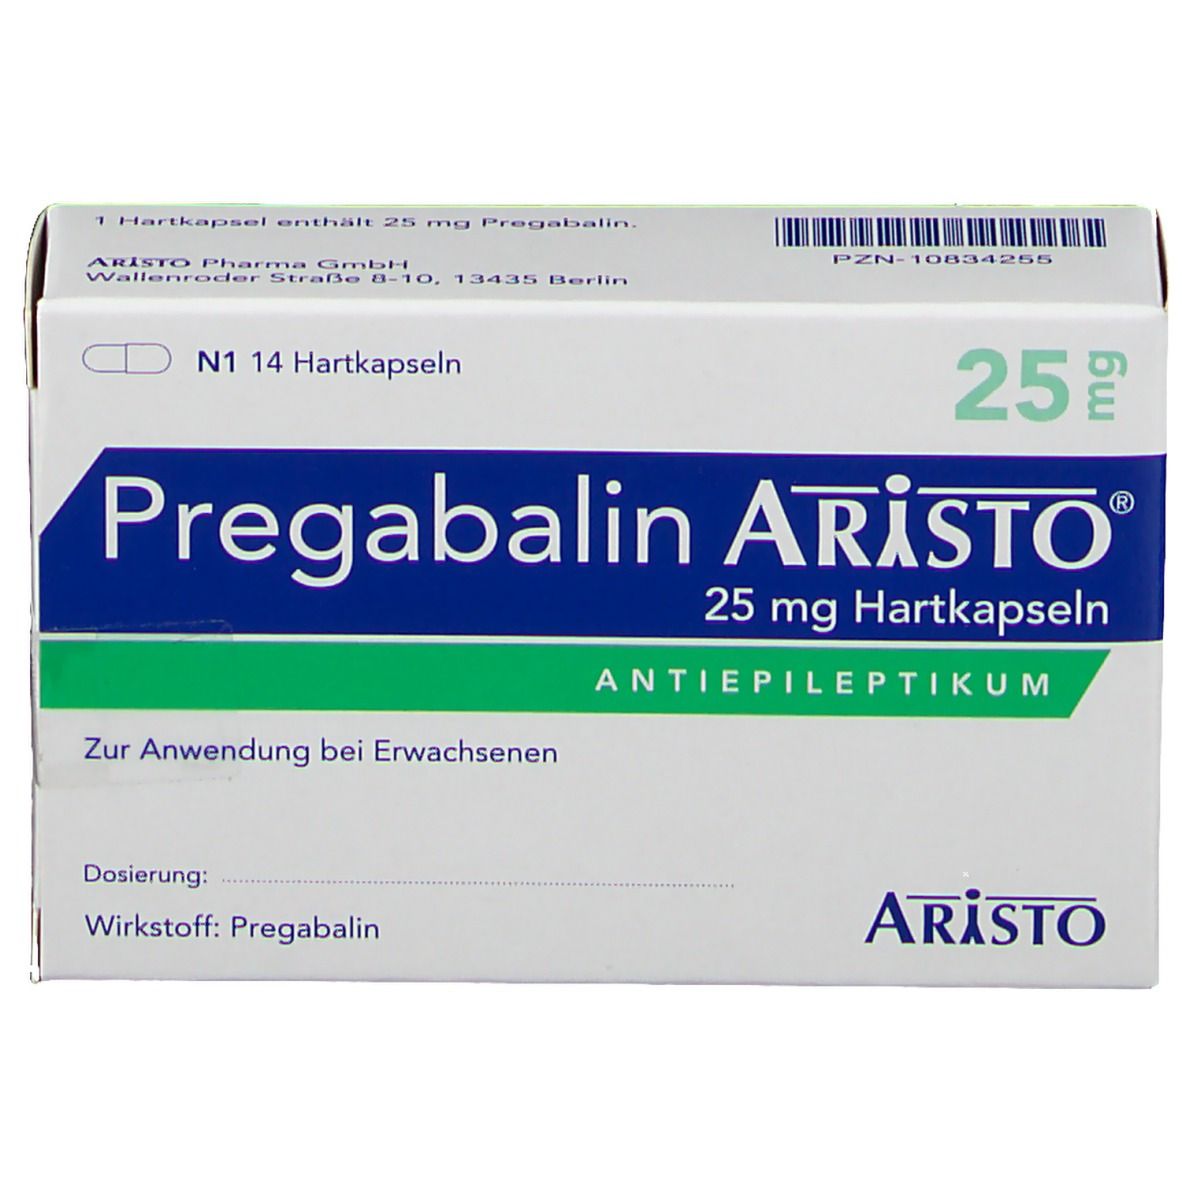 Pregabalin Aristo®25 mg